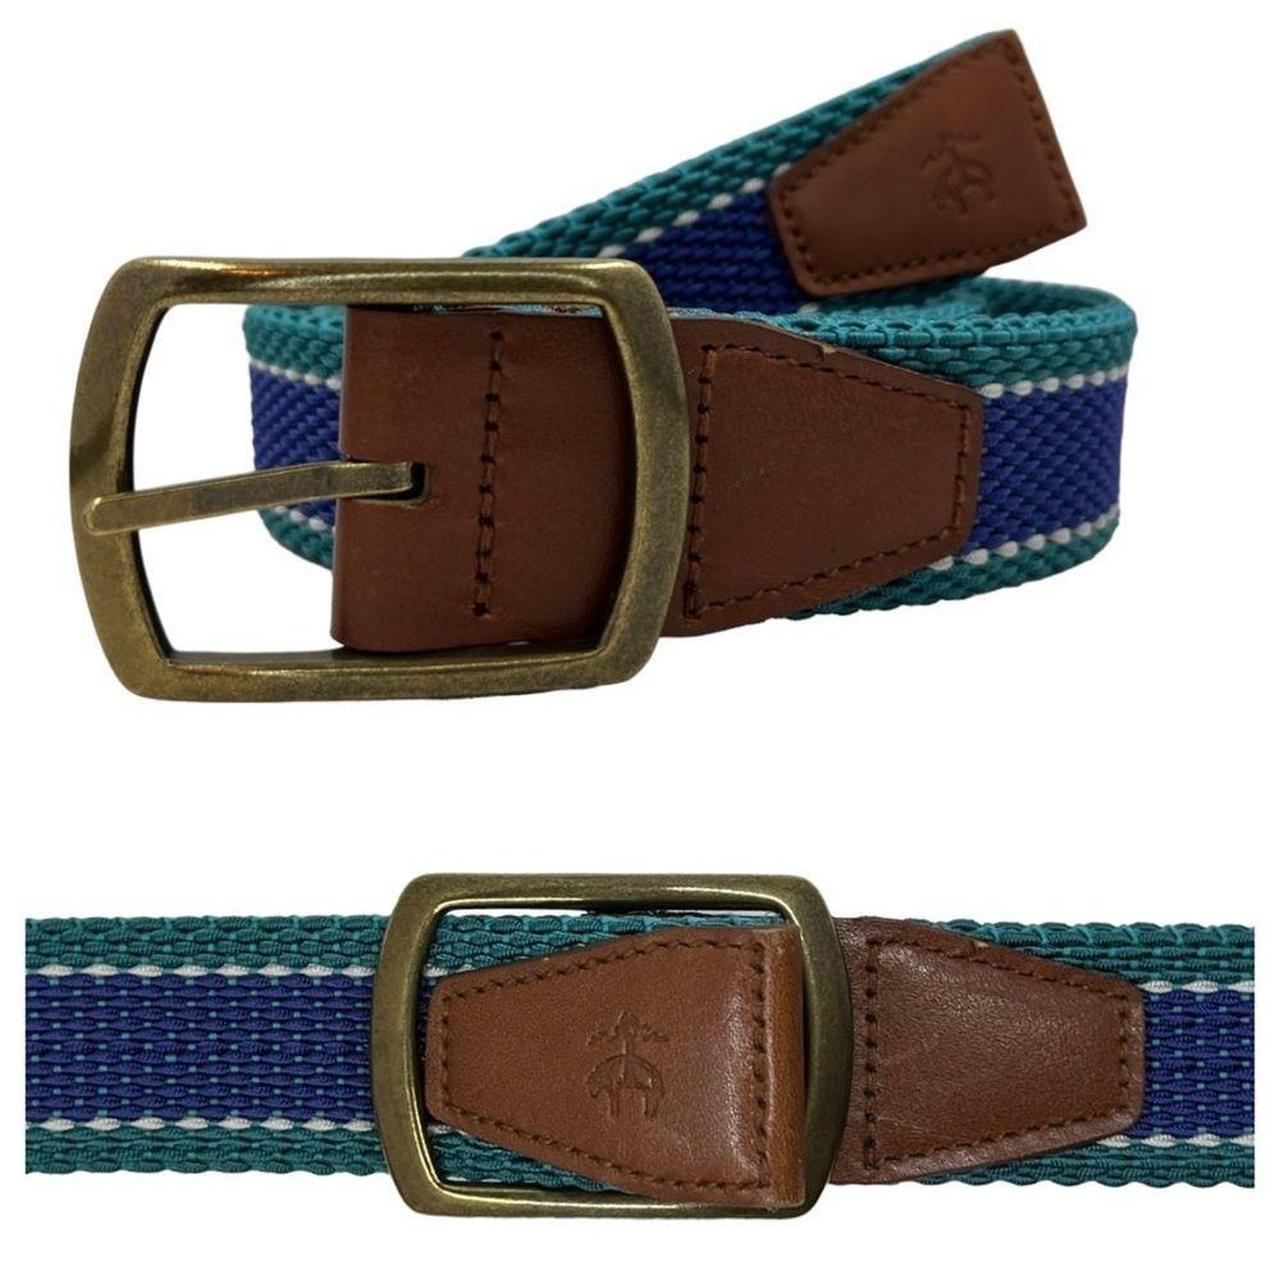 leather webbed belt with brass buckle by Brooks   Depop